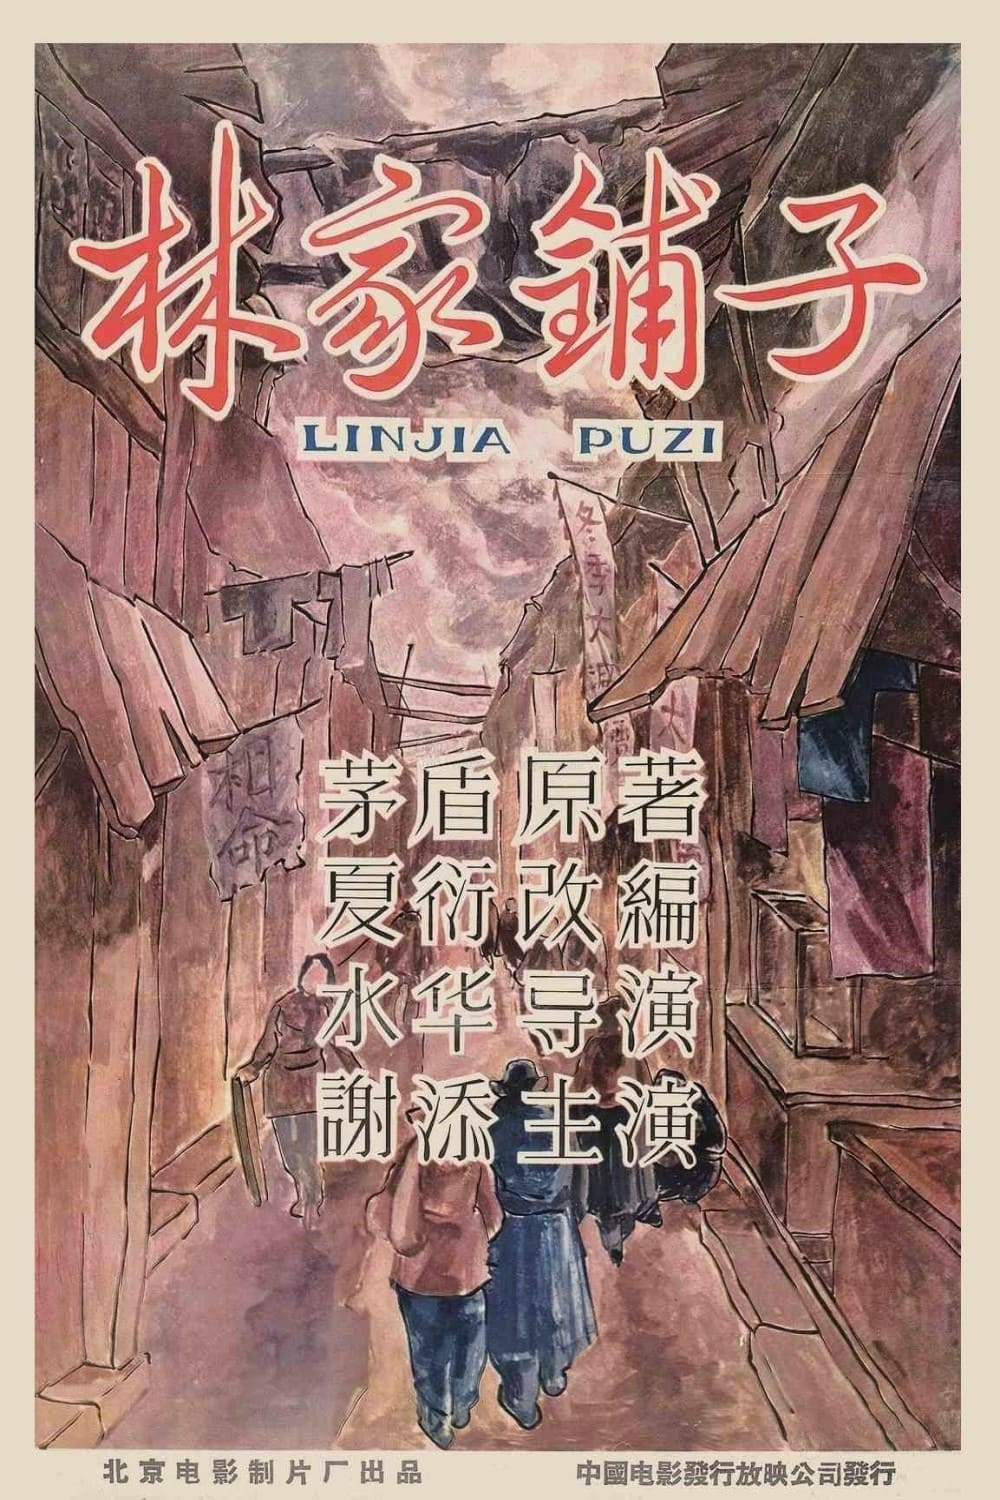 The Lin Family Shop (1959)